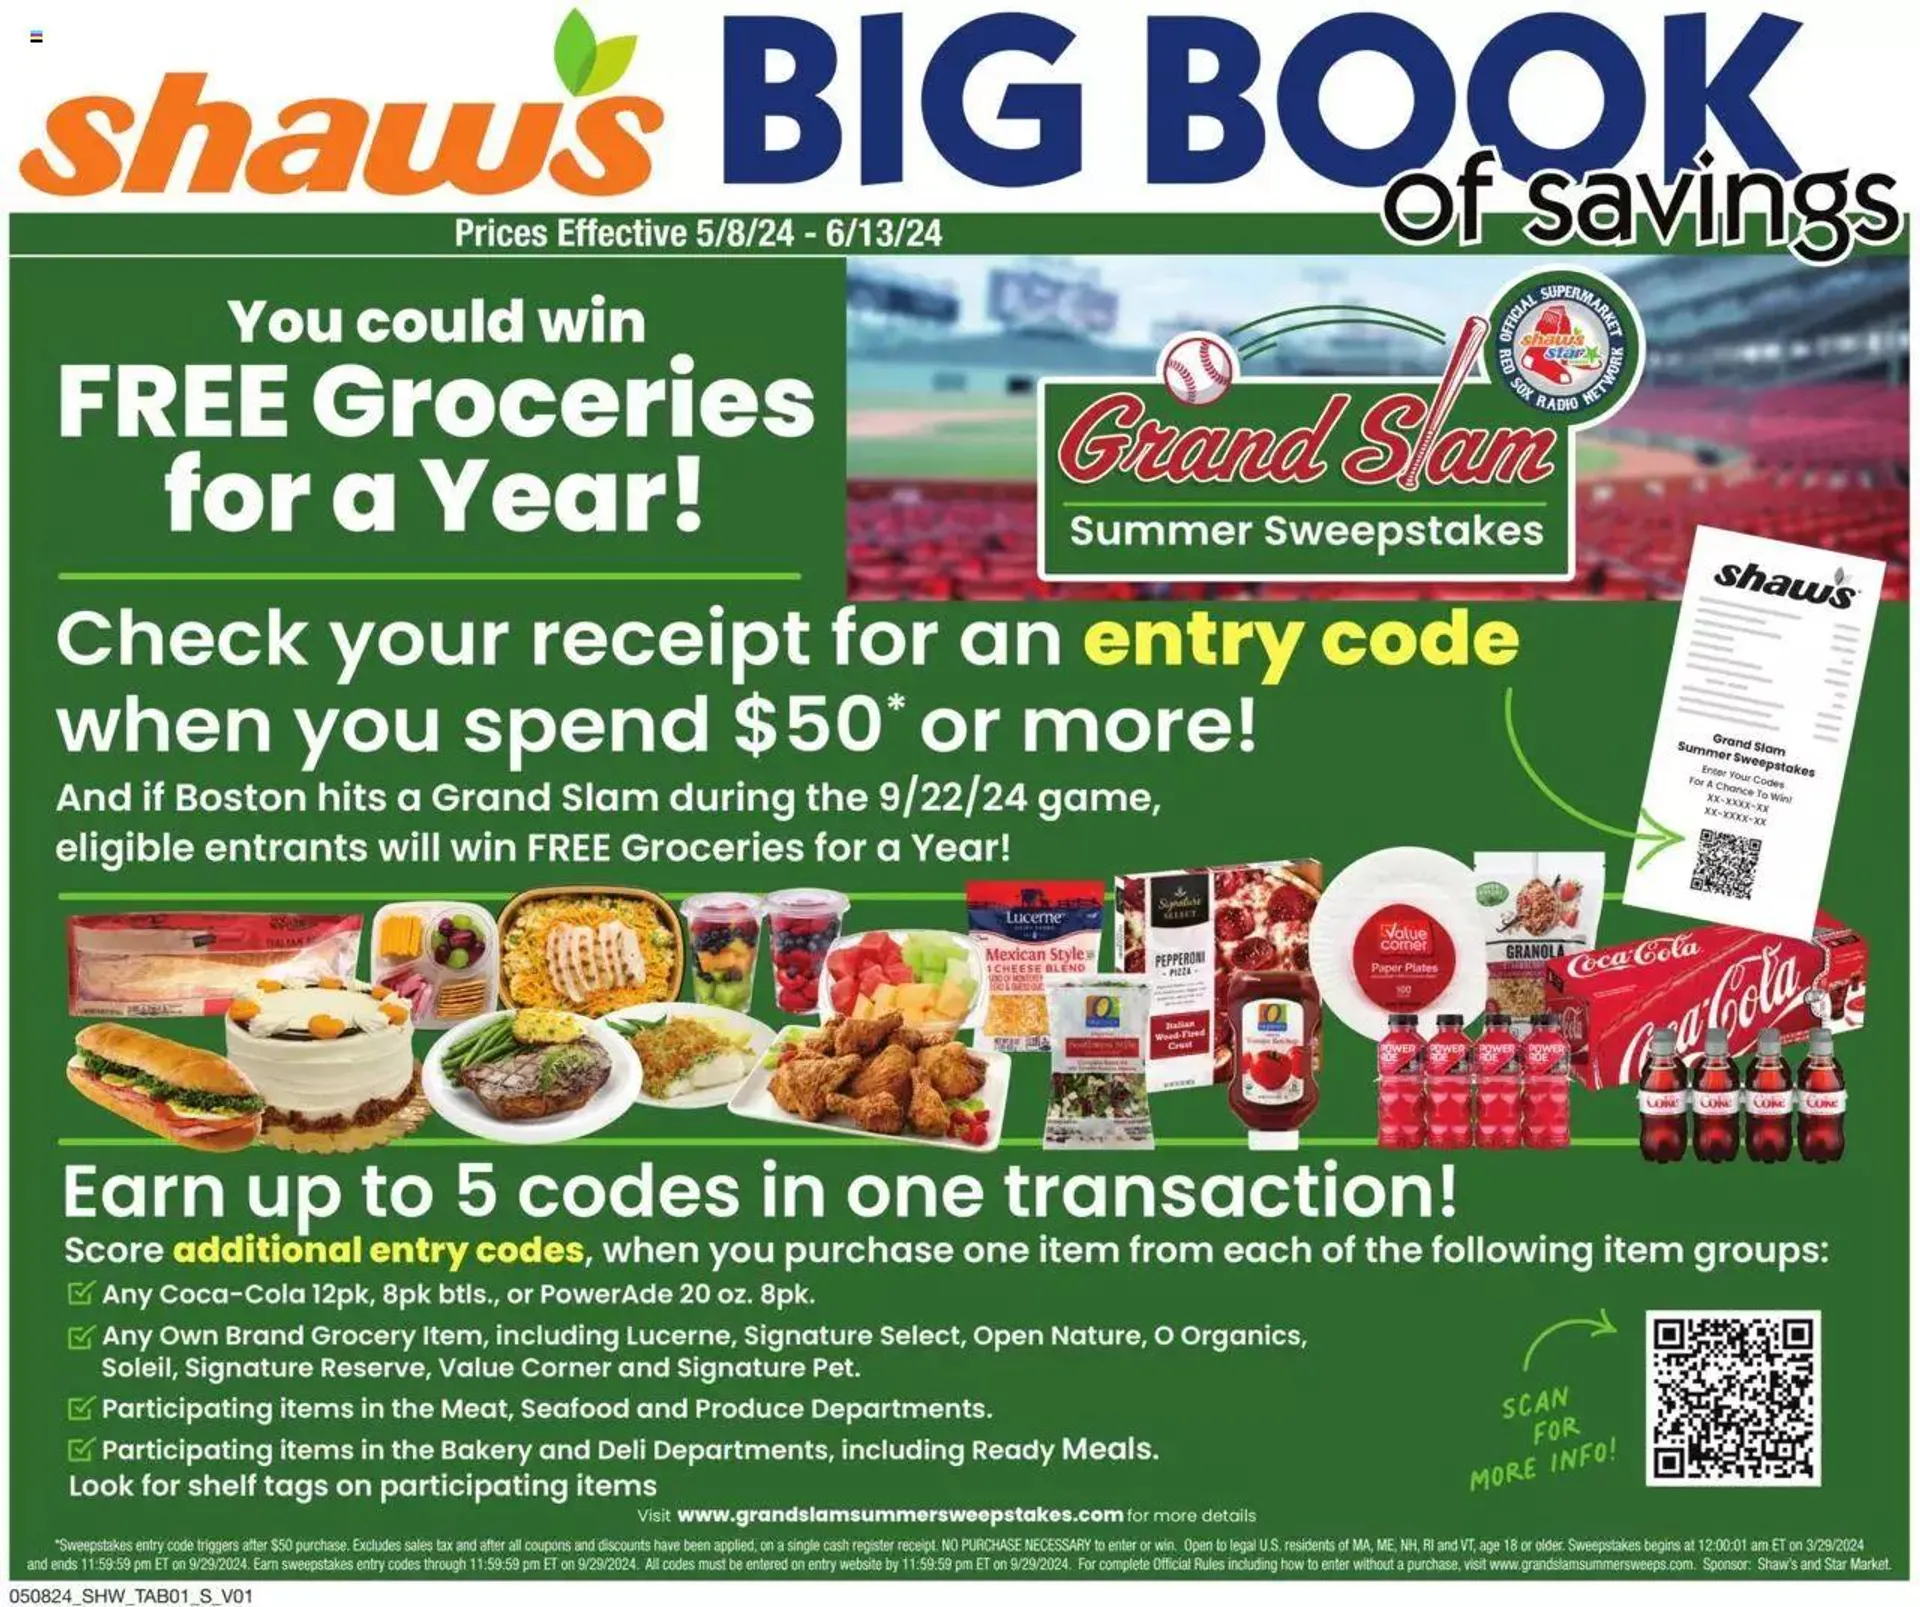 Shaws - Big Book of Savings - 0